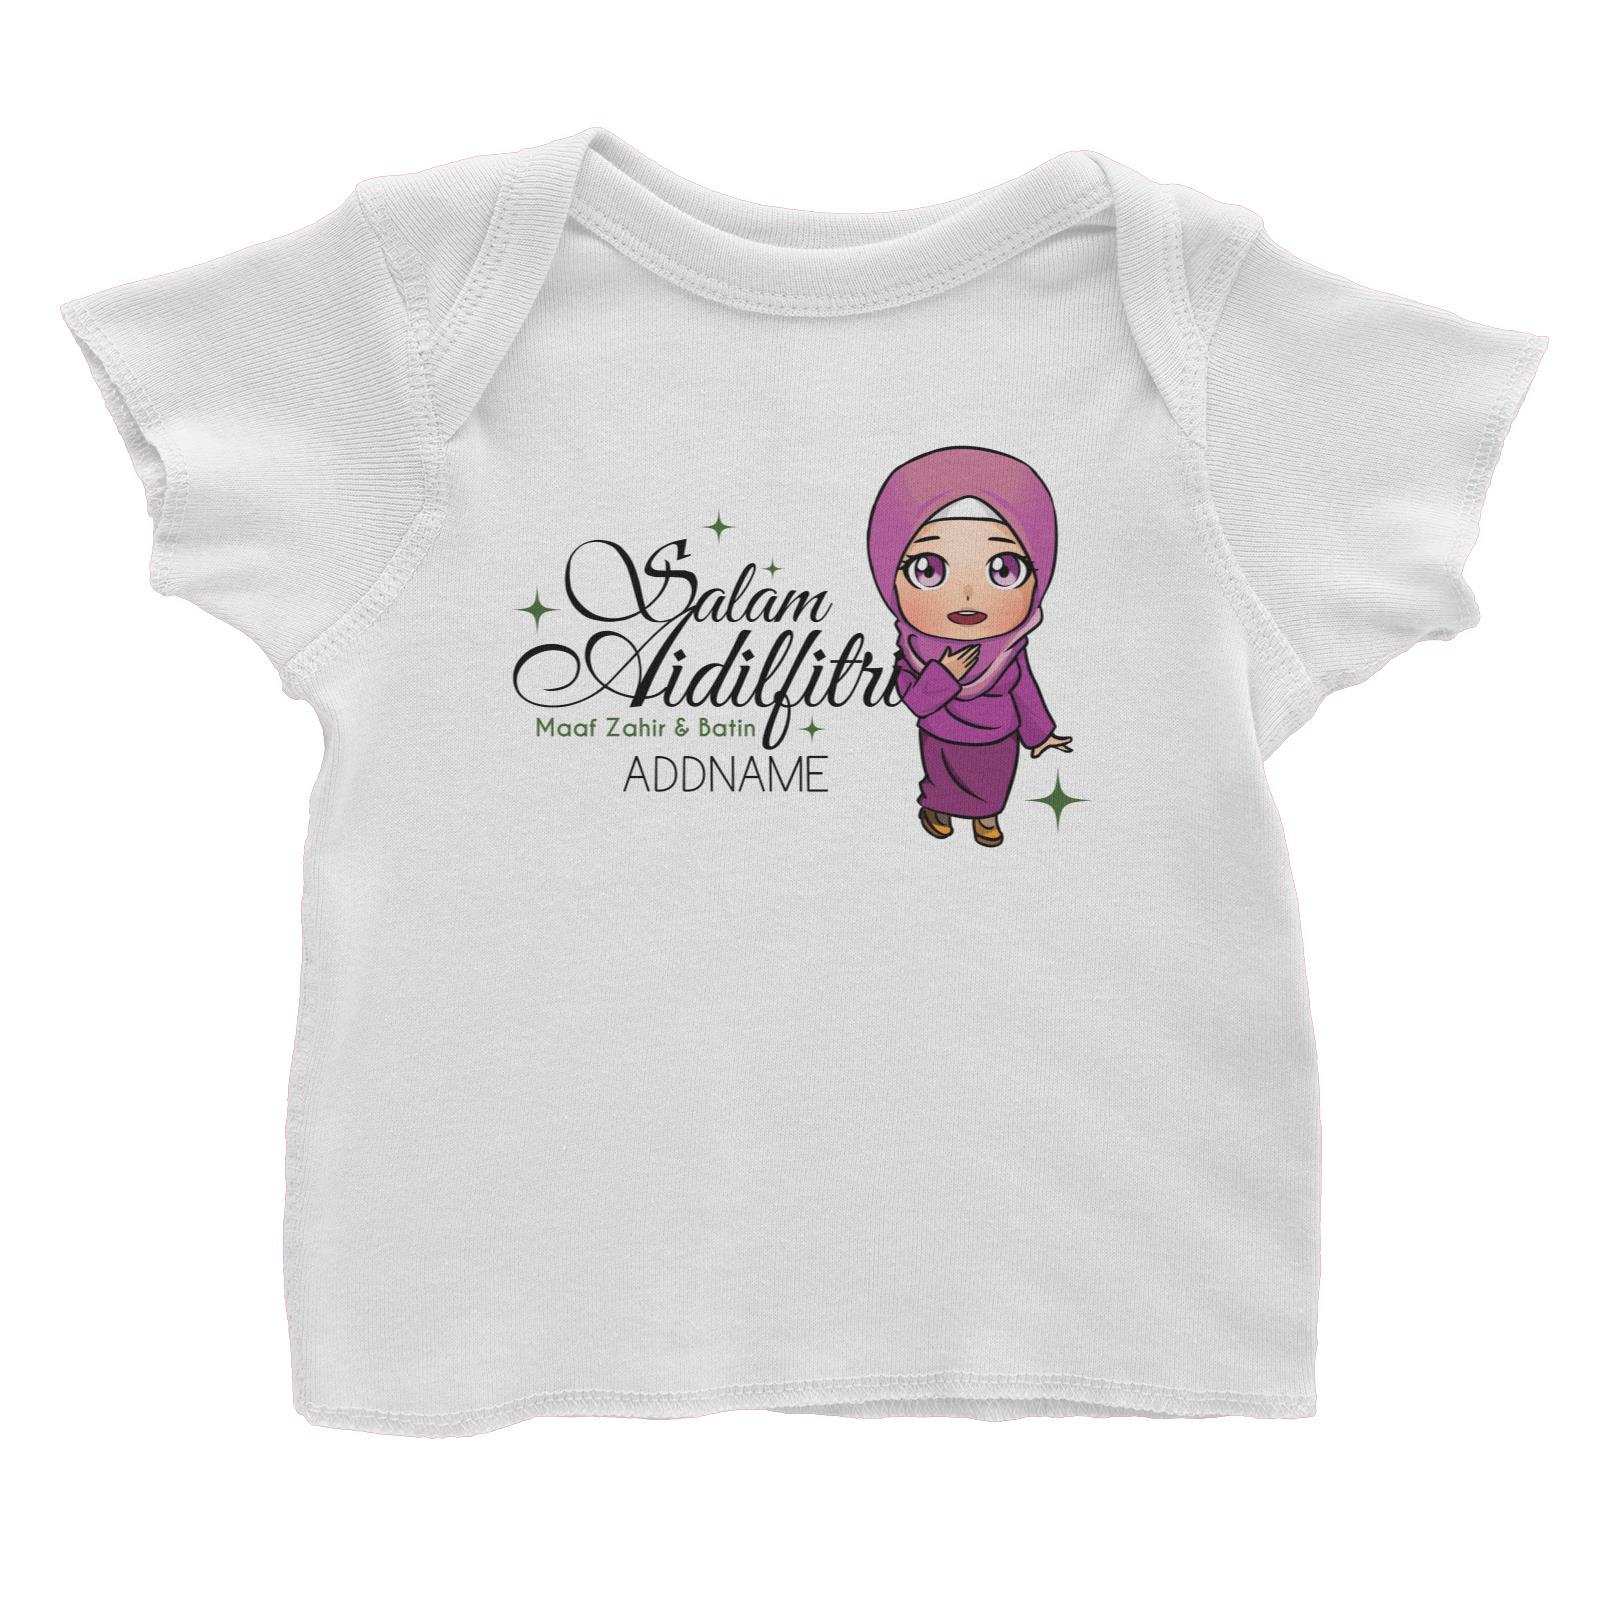 Raya Chibi Wishes Woman Addname Wishes Everyone Salam Aidilfitri Maaf Zahir & Batin Baby T-Shirt